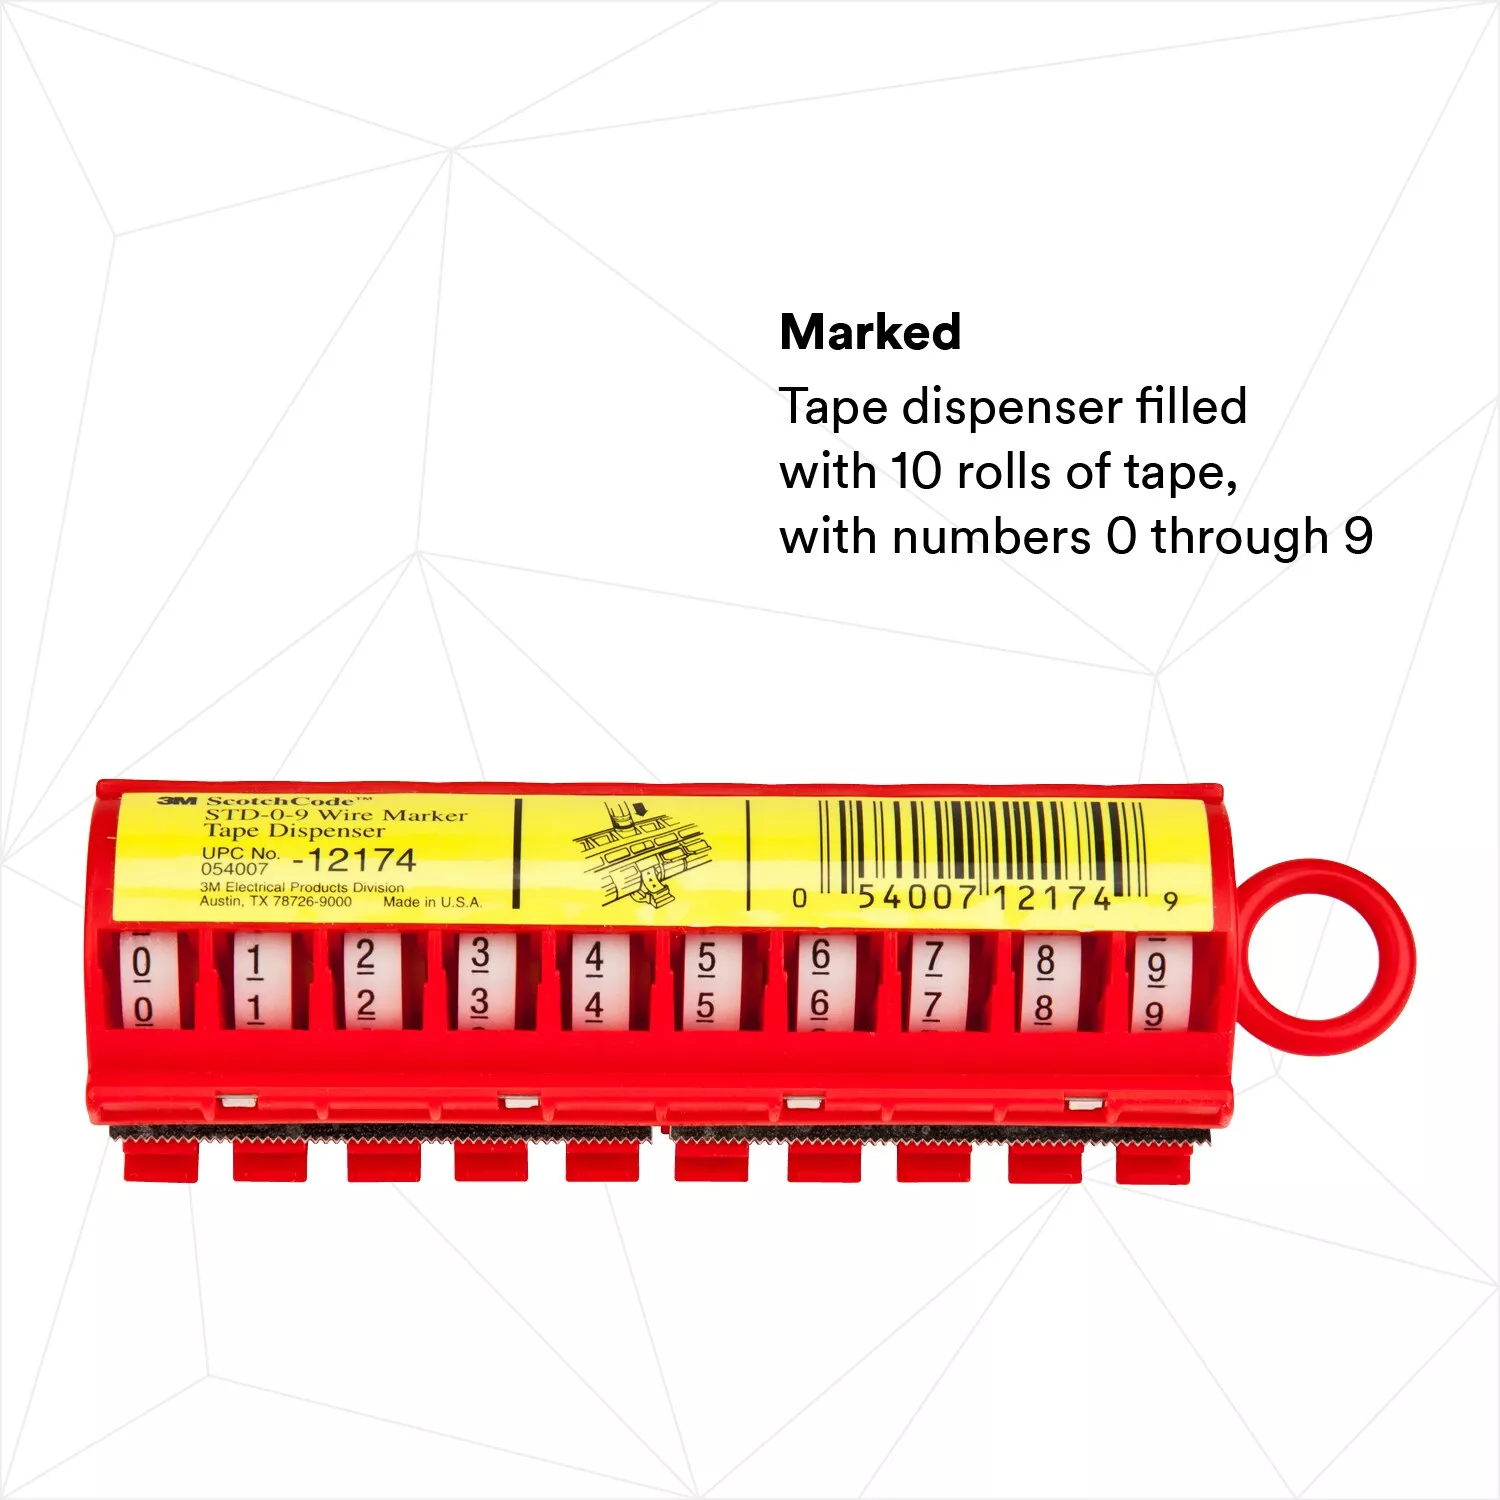 SKU 7000006035 | 3M™ ScotchCode™ Wire Marker Tape Dispenser with Tape STD-0-9